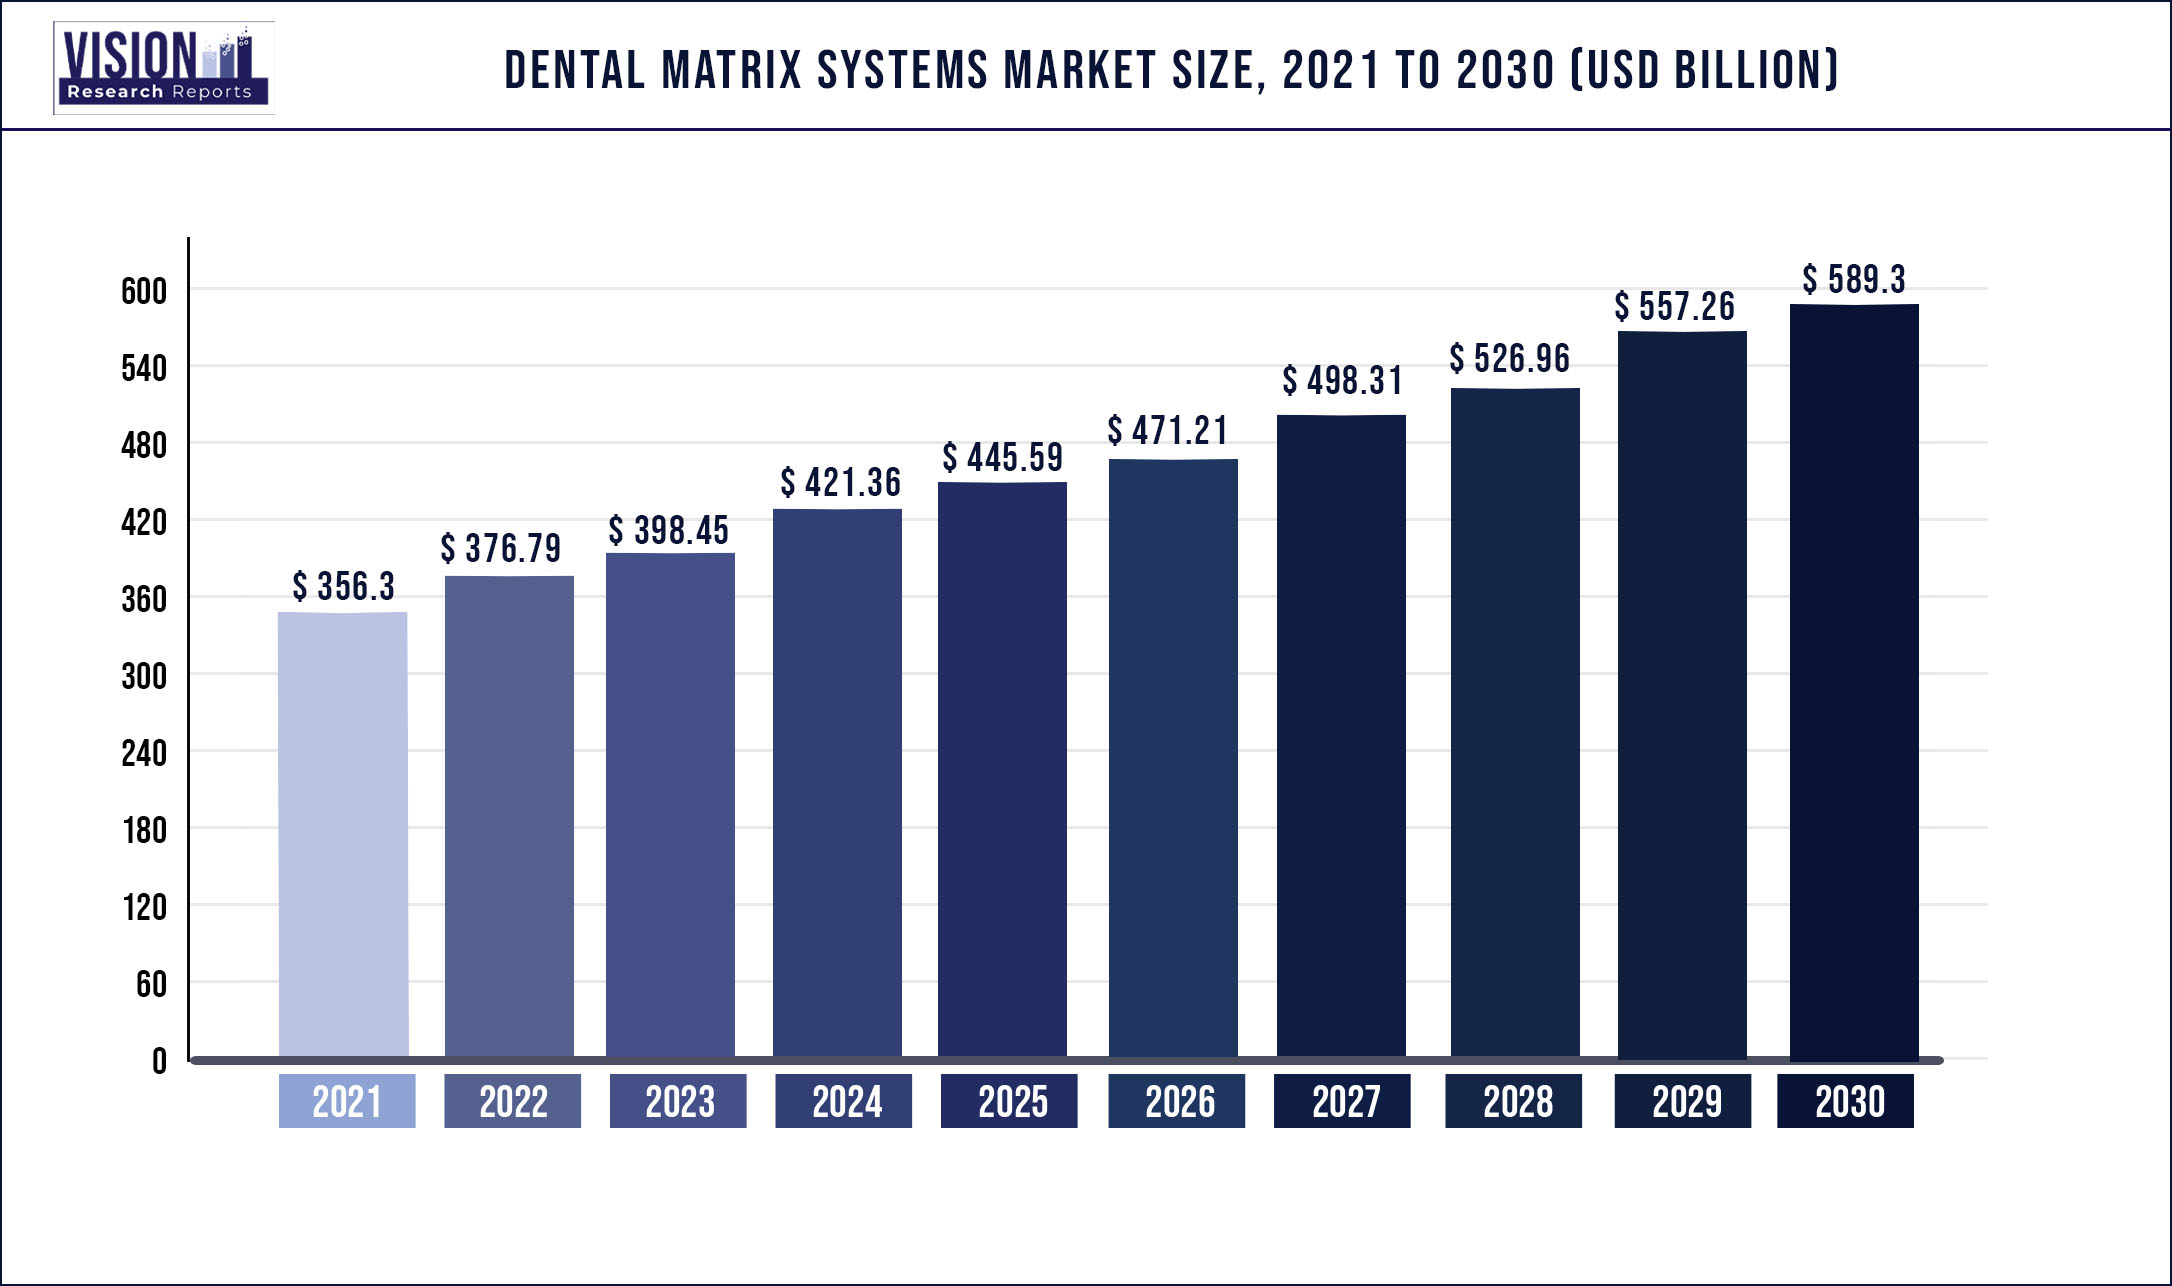 Dental Matrix Systems Market Size 2021 to 2030